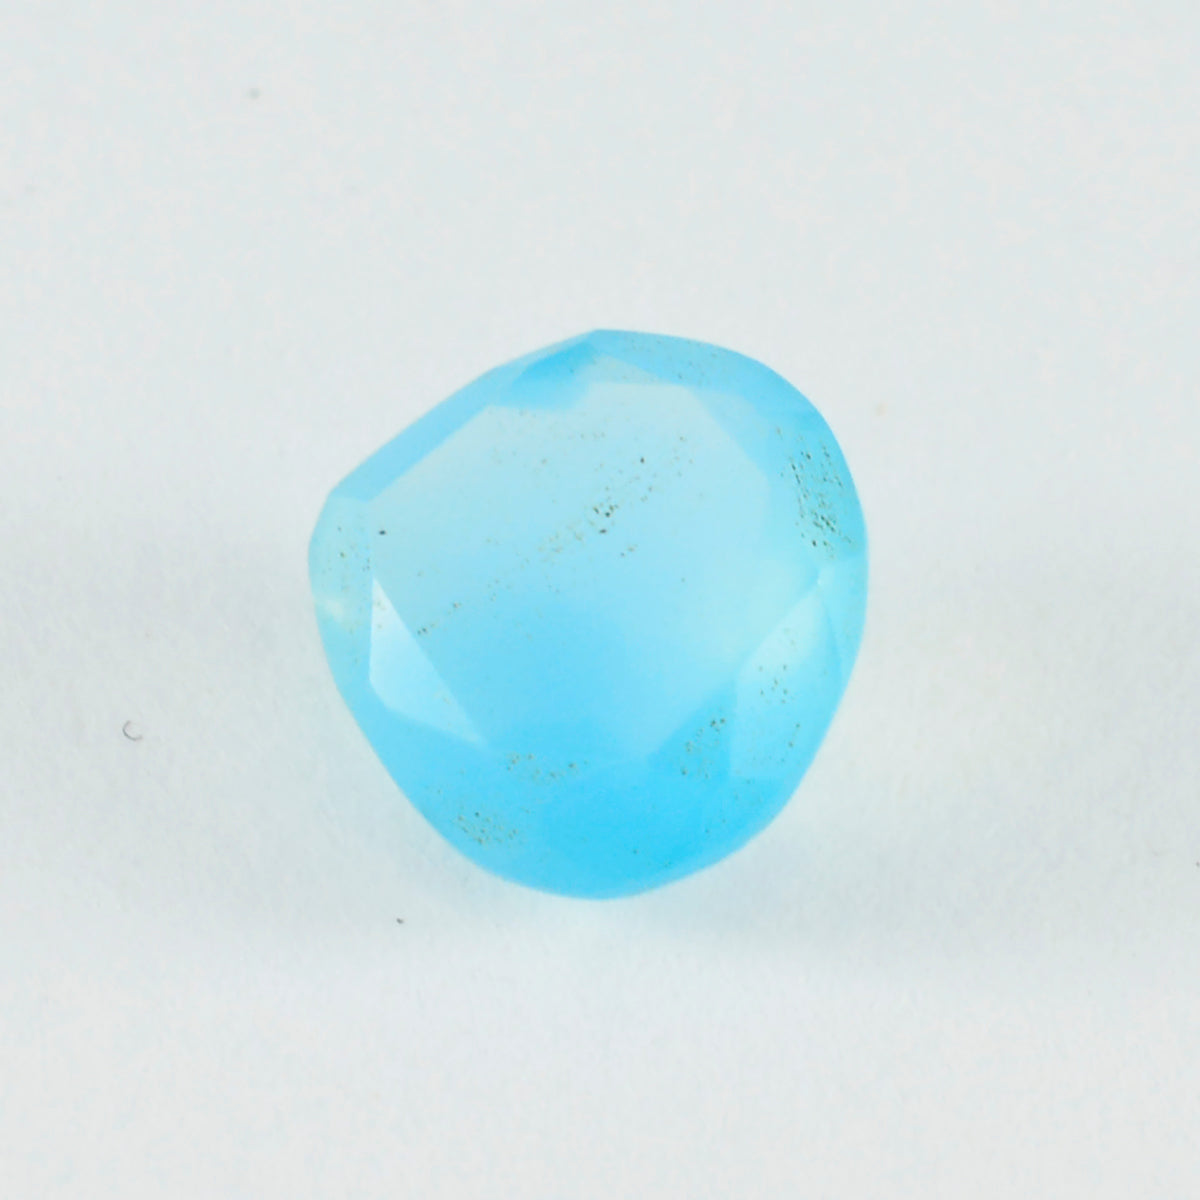 Riyogems 1PC Natural Aqua Chalcedony Faceted 15x15 mm Heart Shape amazing Quality Gemstone